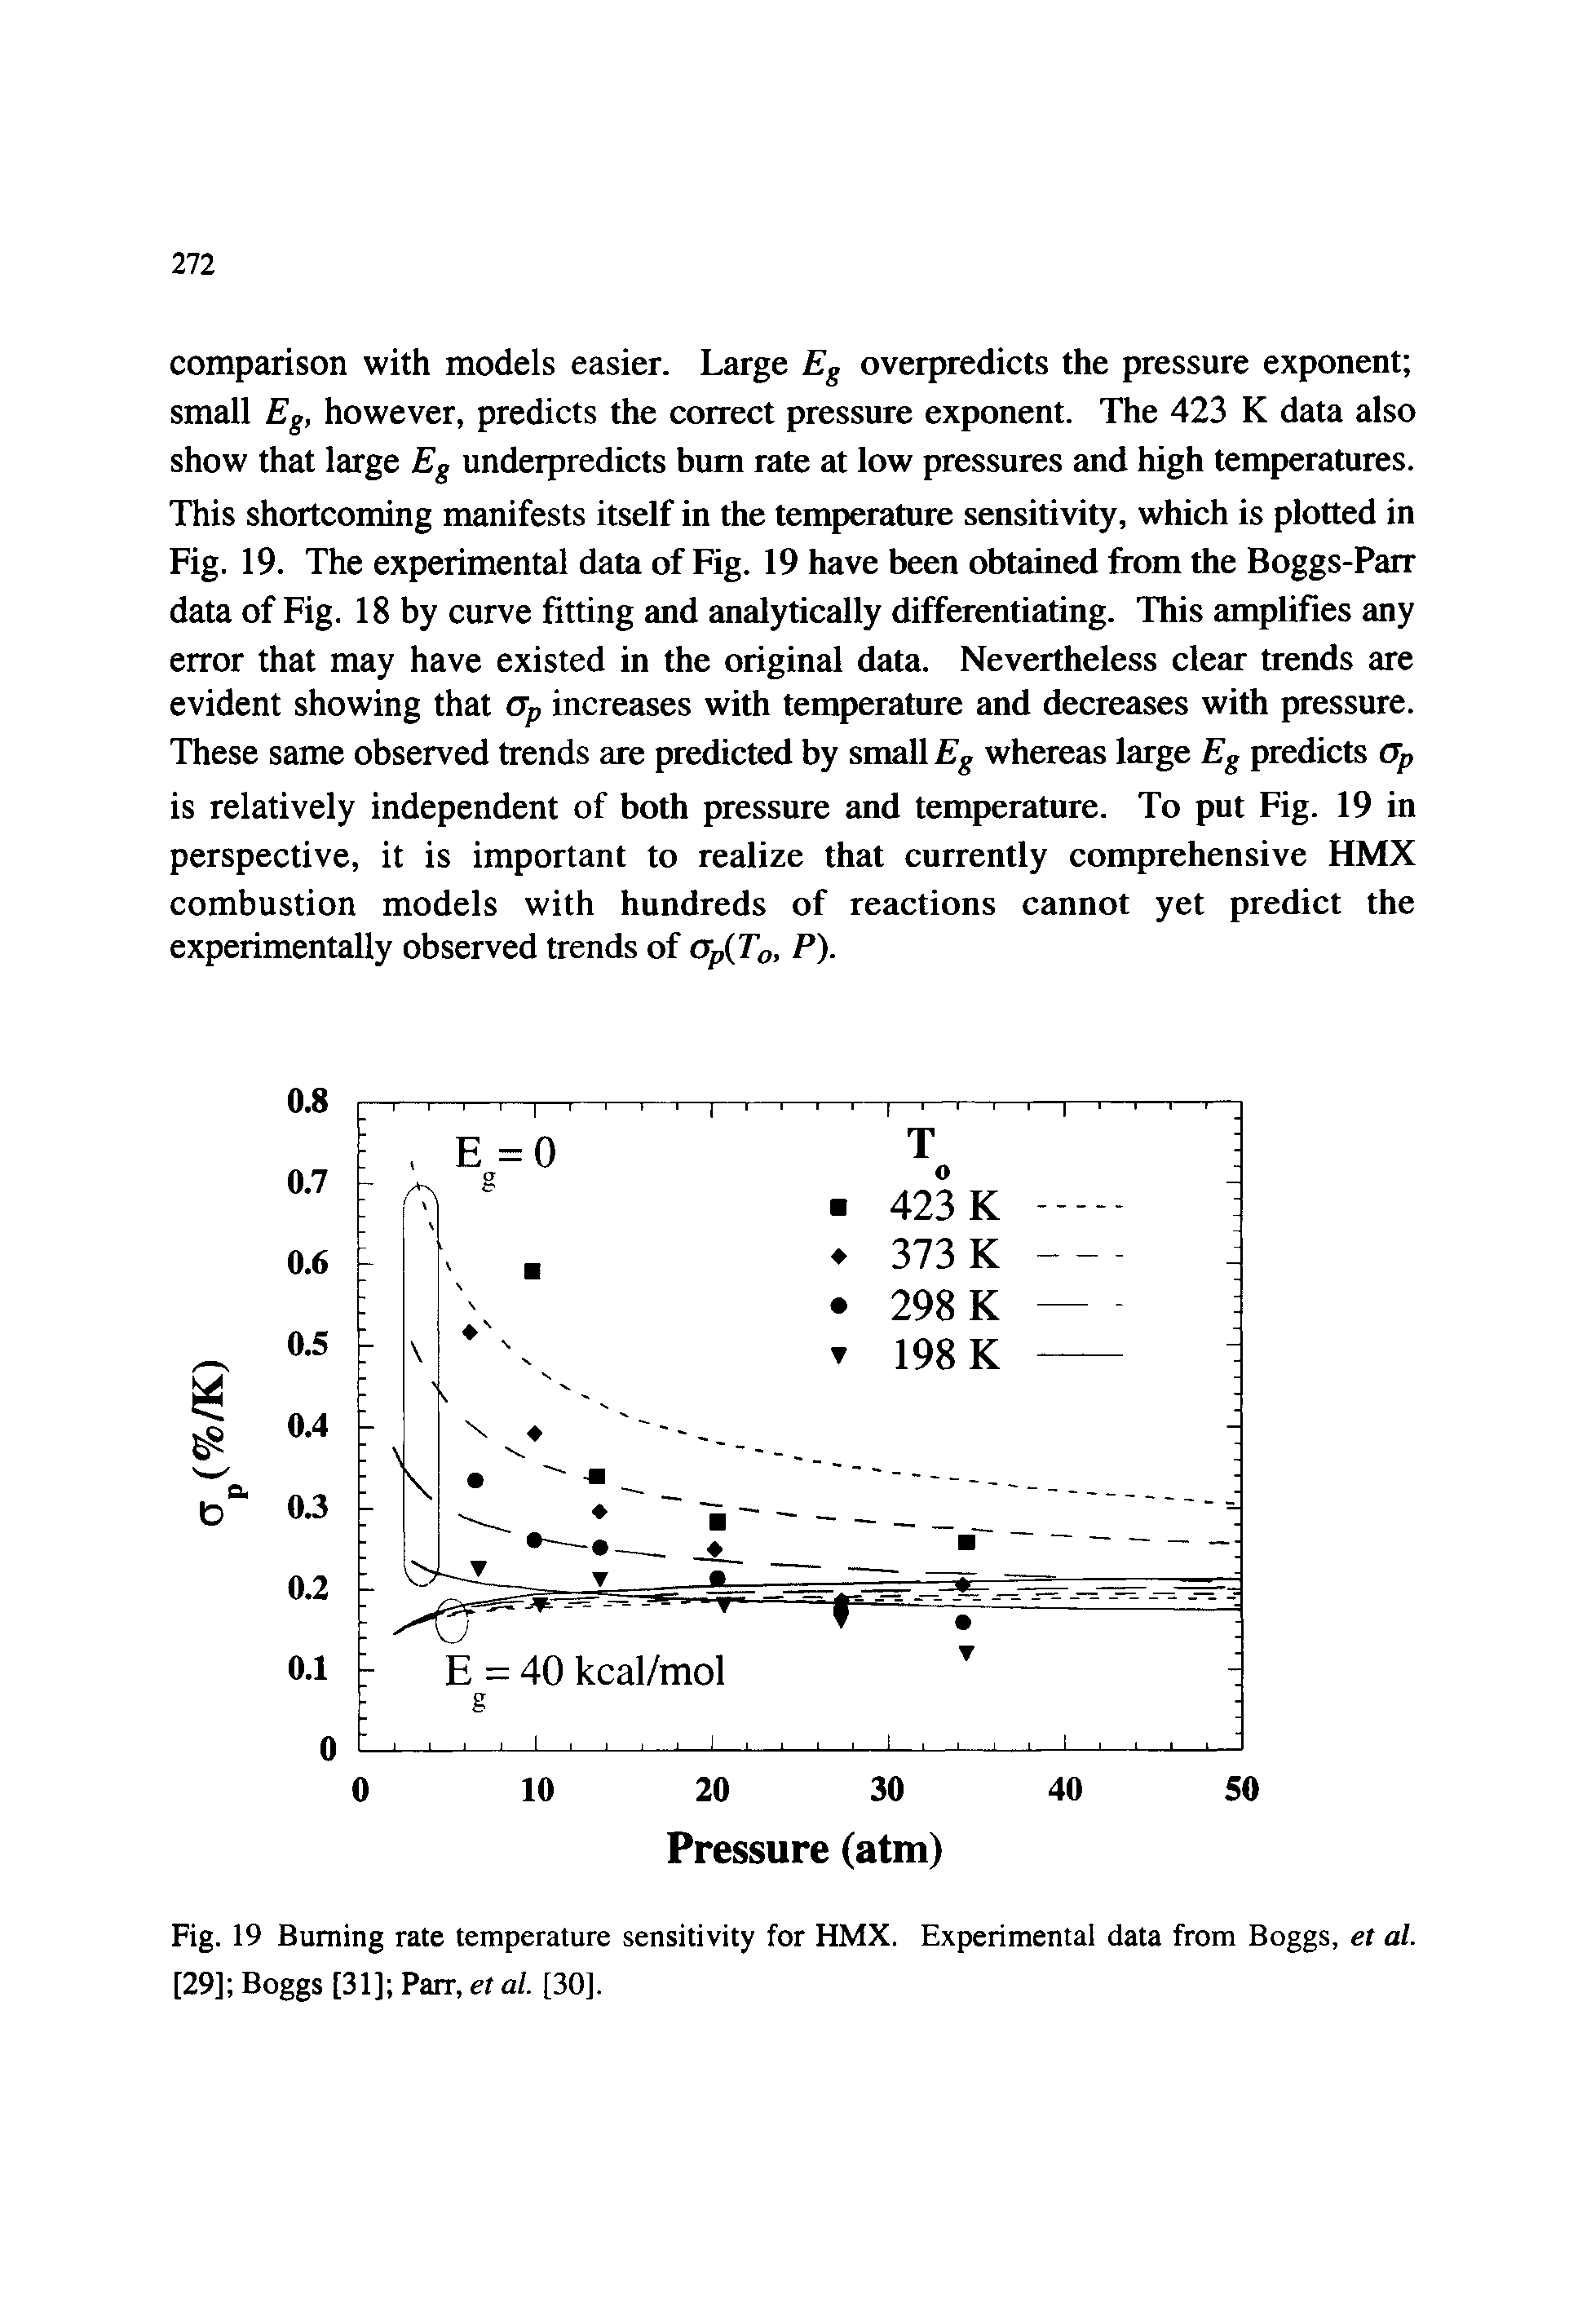 Fig. 19 Burning rate temperature sensitivity for HMX. Experimental data from Boggs, et al. [29] Boggs [31] Parr, et al. [30].